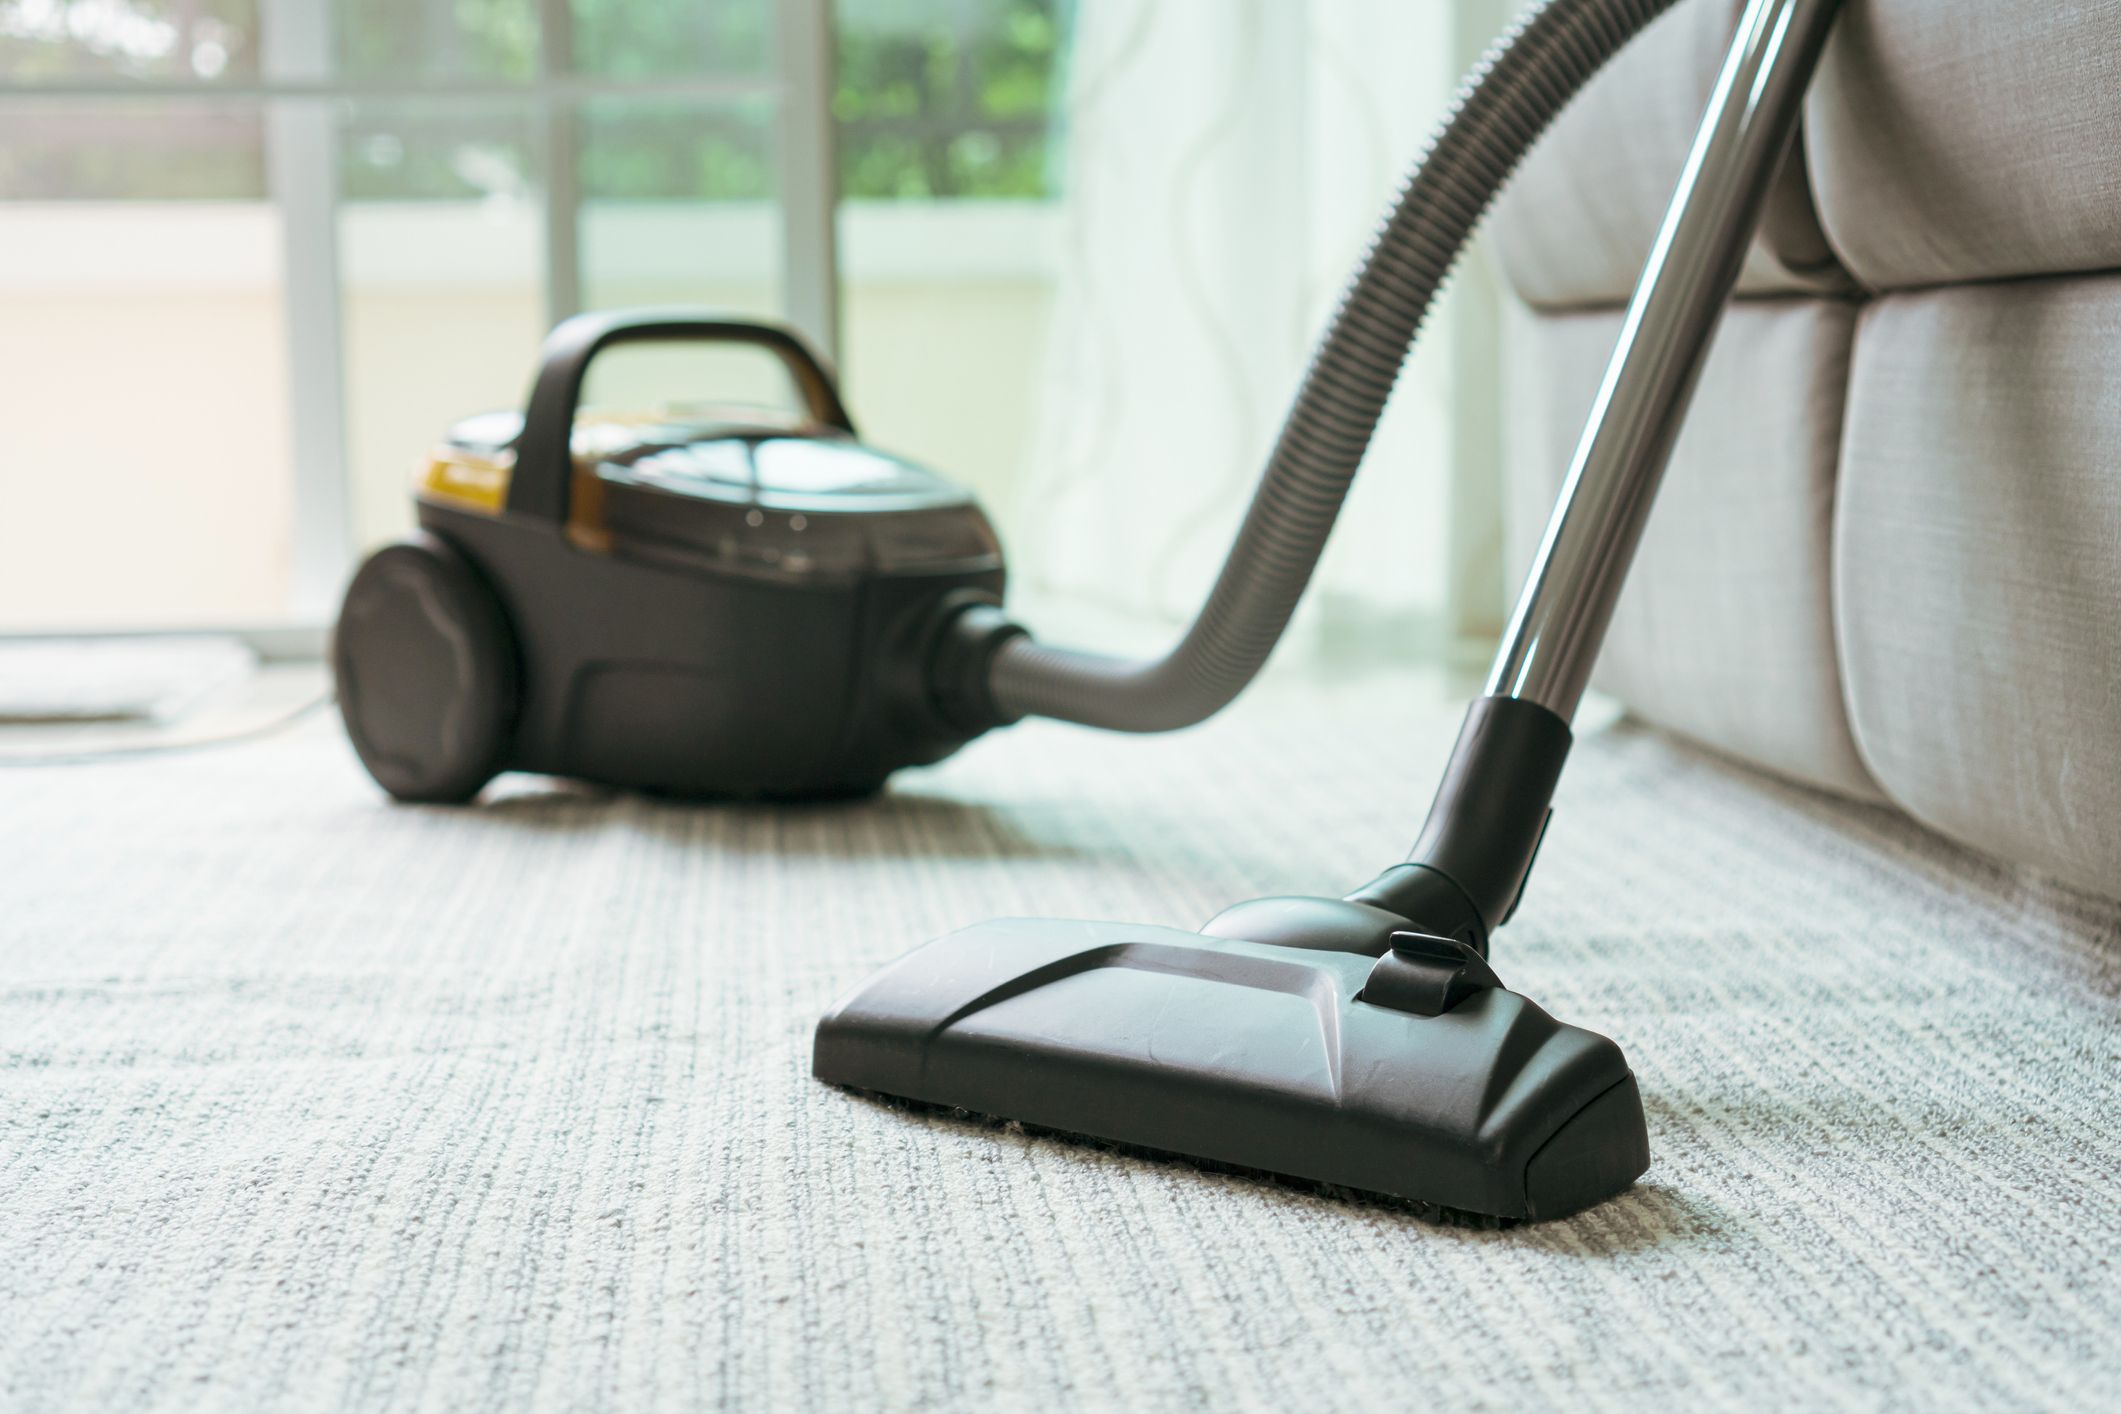 8 Best Hepa Vacuum Cleaners Reviews 2021, Top Rated Vacuums For Hardwood Floors And Carpet